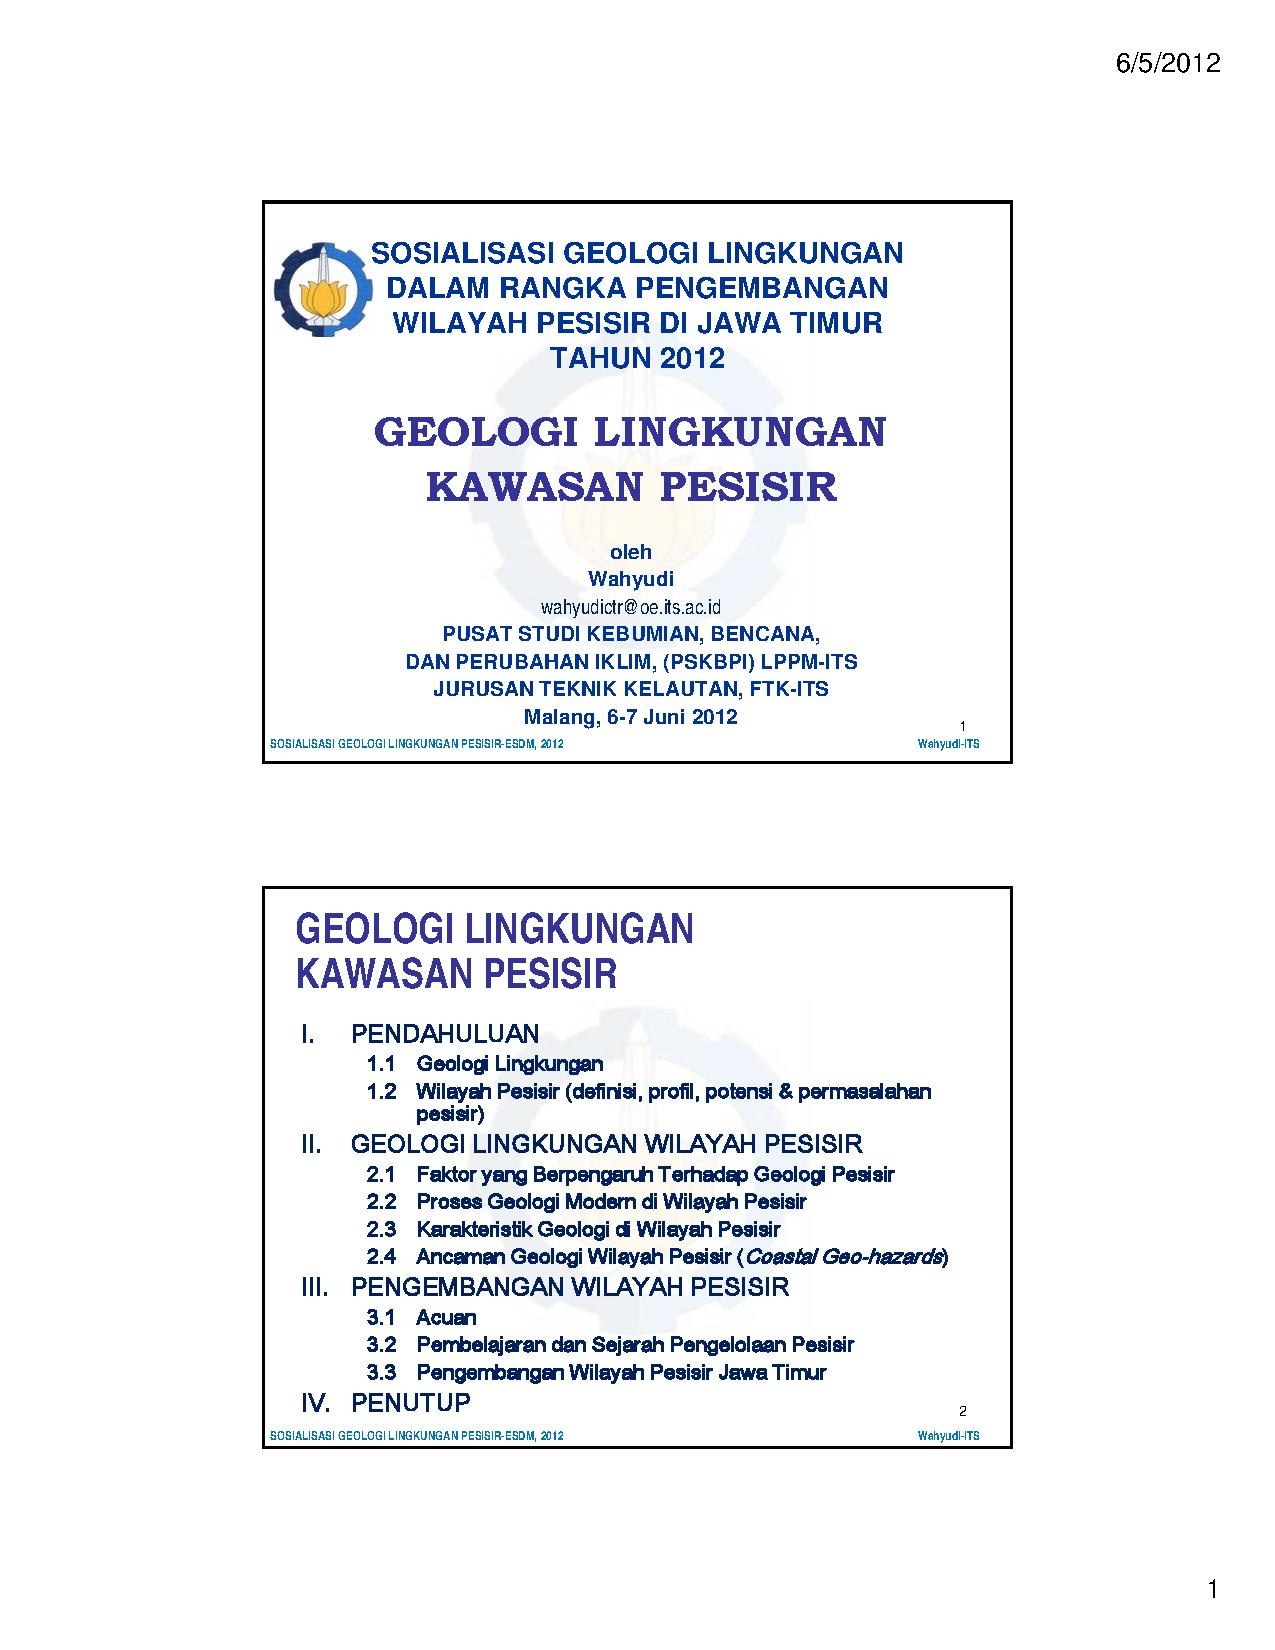 WAHYUDI-ITS Geologi Lingkungan Wilayah Pesisir.pdf